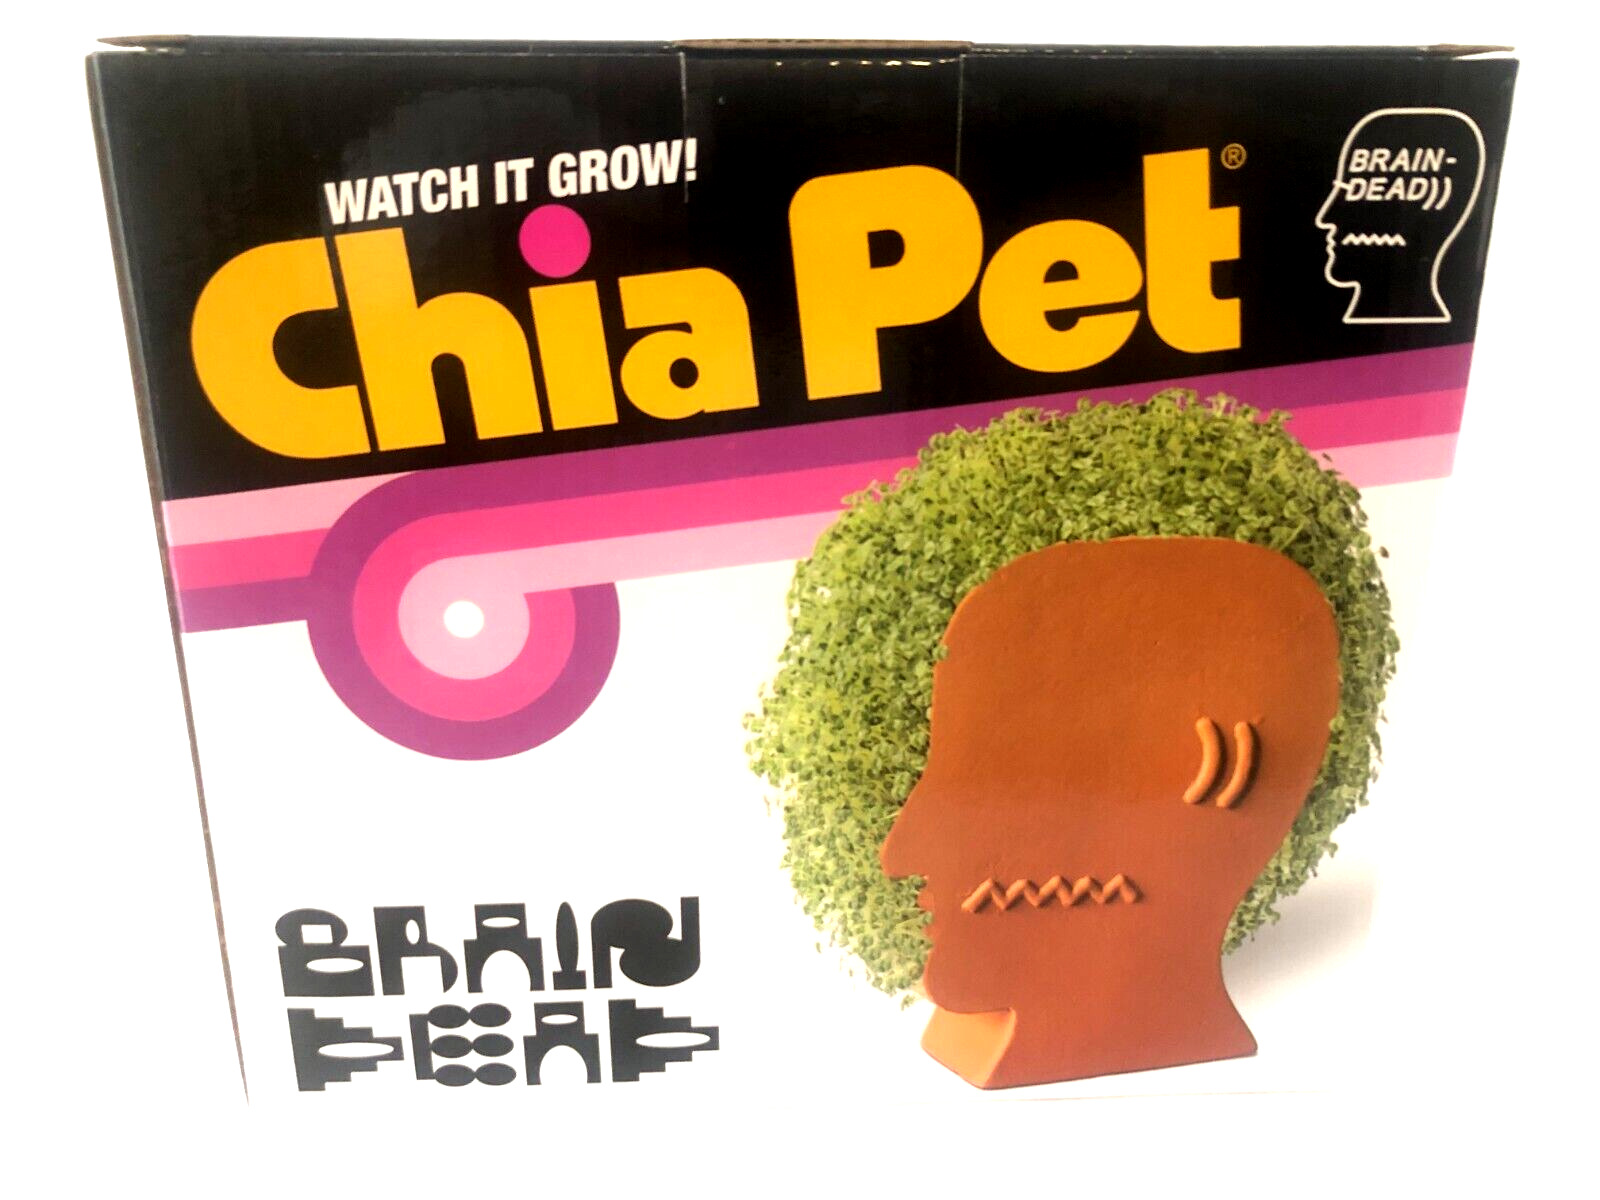 NIB BRAIN DEAD CHIA PET New in Box Skull Mohawk Head Logo Watch it Grow Plant